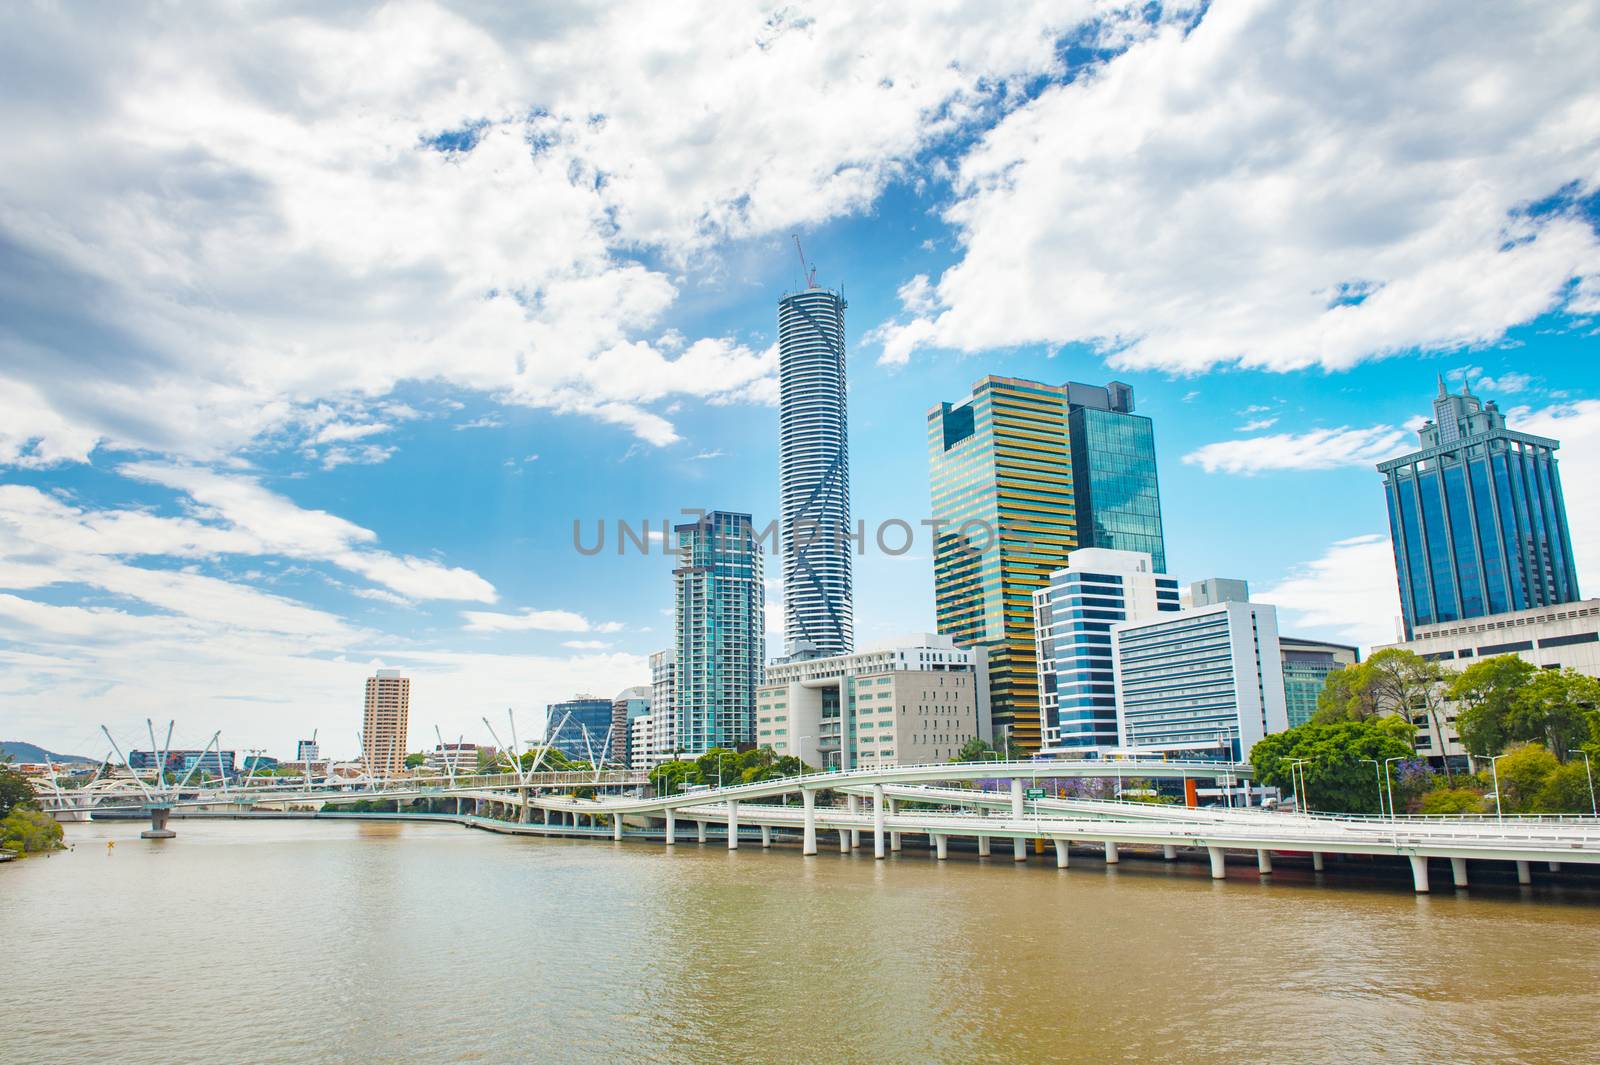 Skyline of Australian city Brisbane by fyletto